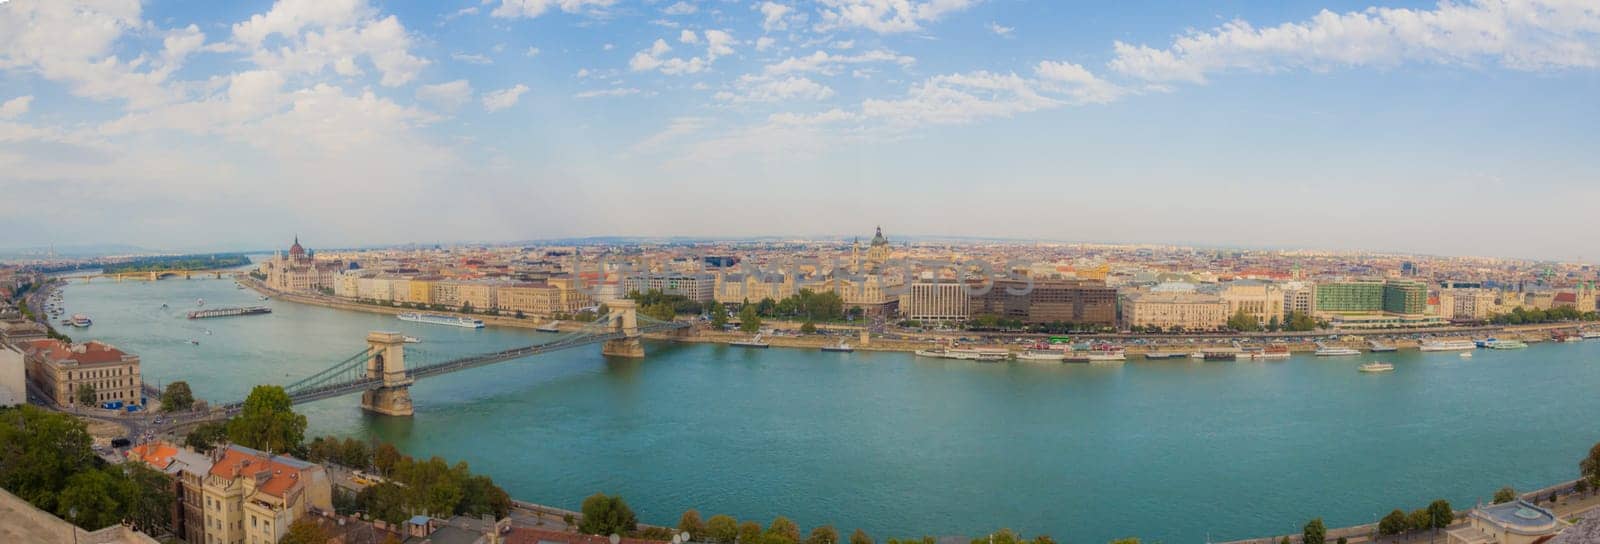 Panorama of the city of Budapest, Hungary.
